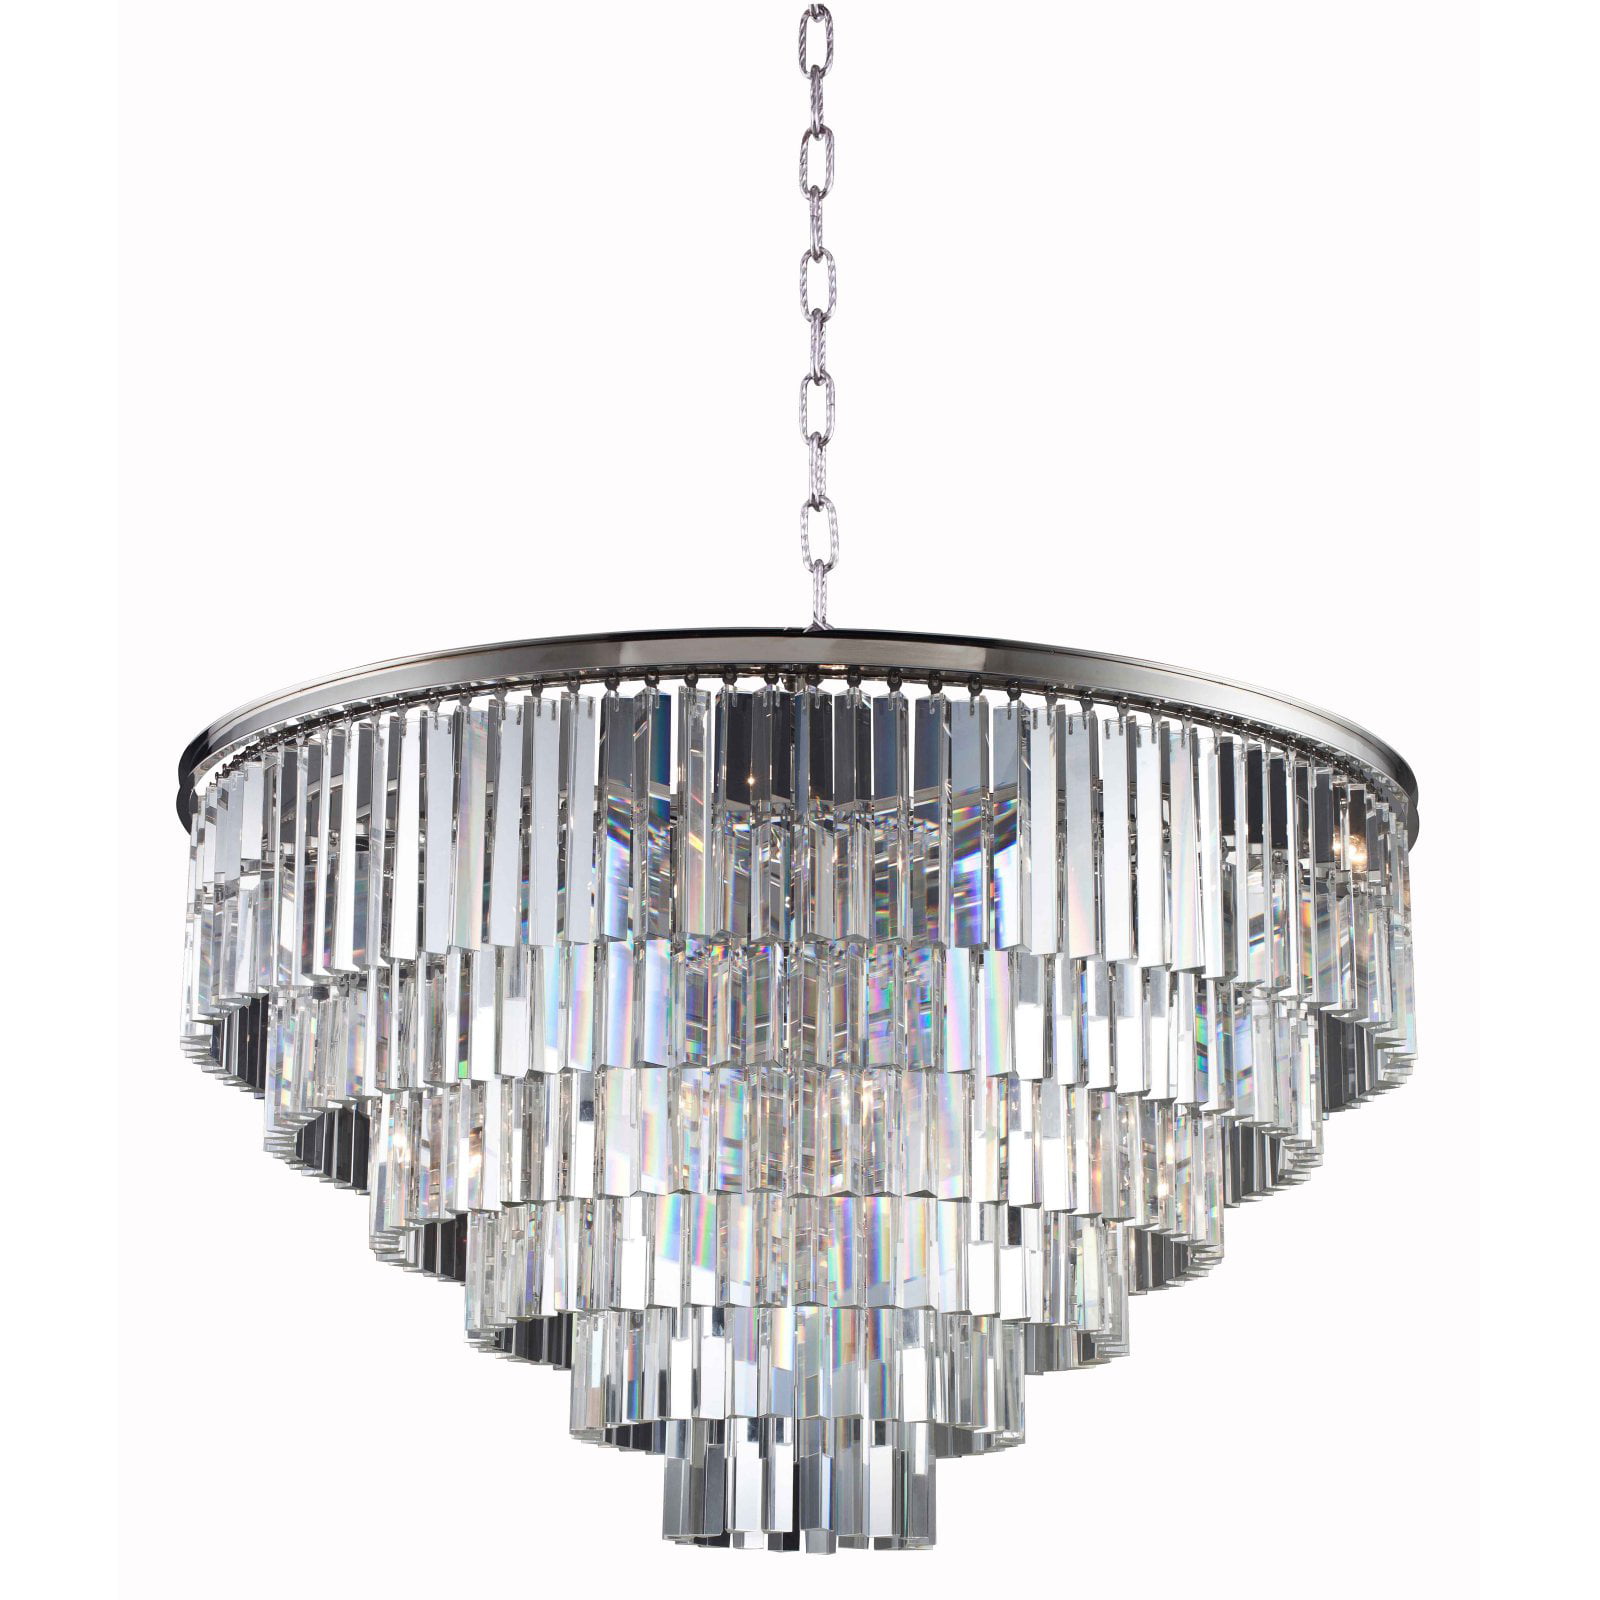 Handmade chandelier 10 LED light bulbs bronze chandelier gold colored glass chandelier for big rooms royal 10 lights